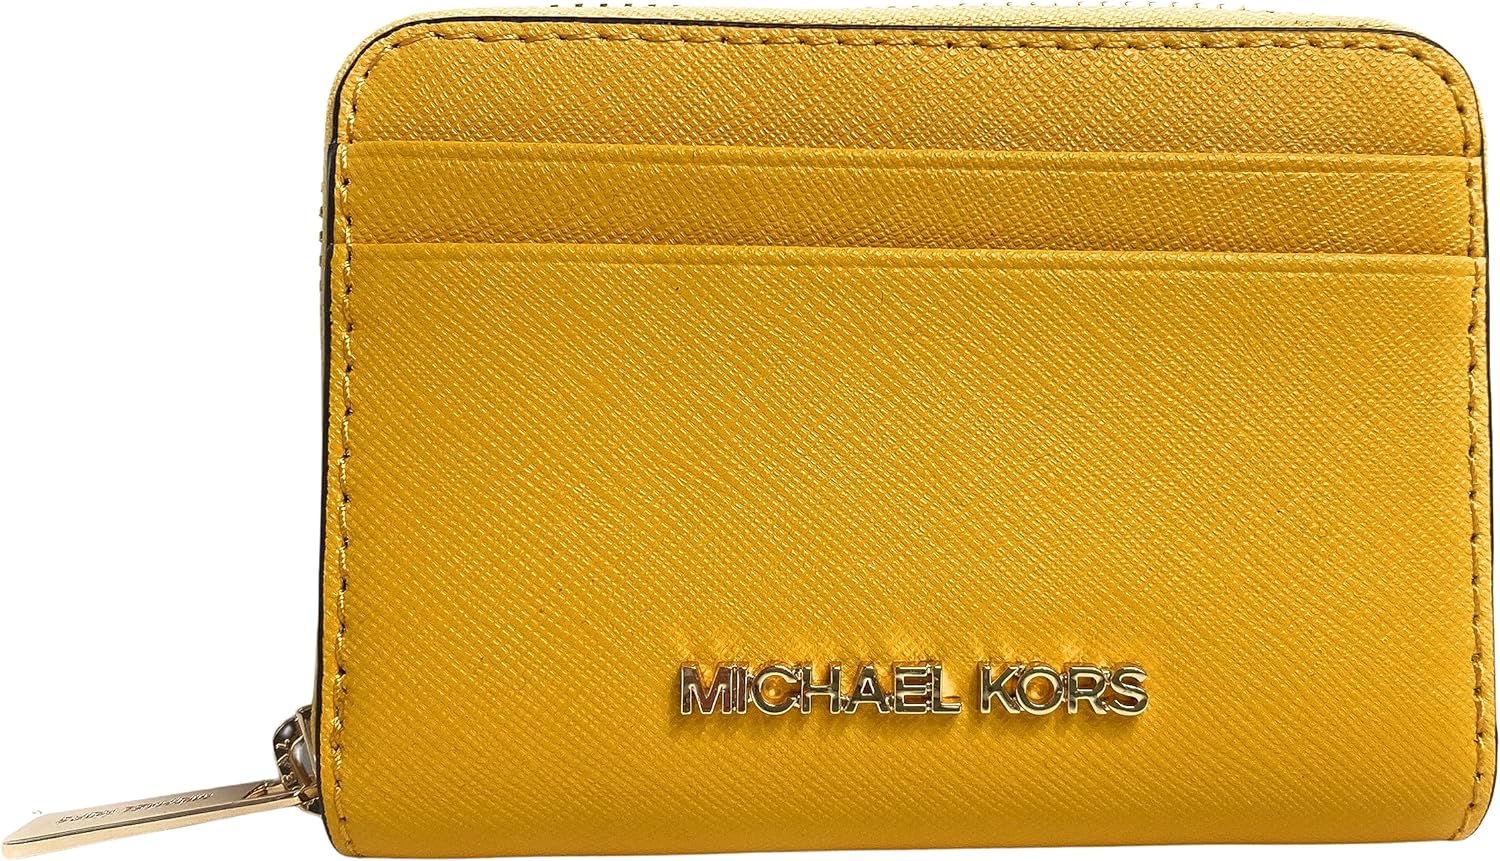 Michael Kors Jet Set Travel Medium Zip Around Card Case (Jasmine Yellow) - image 1 of 2